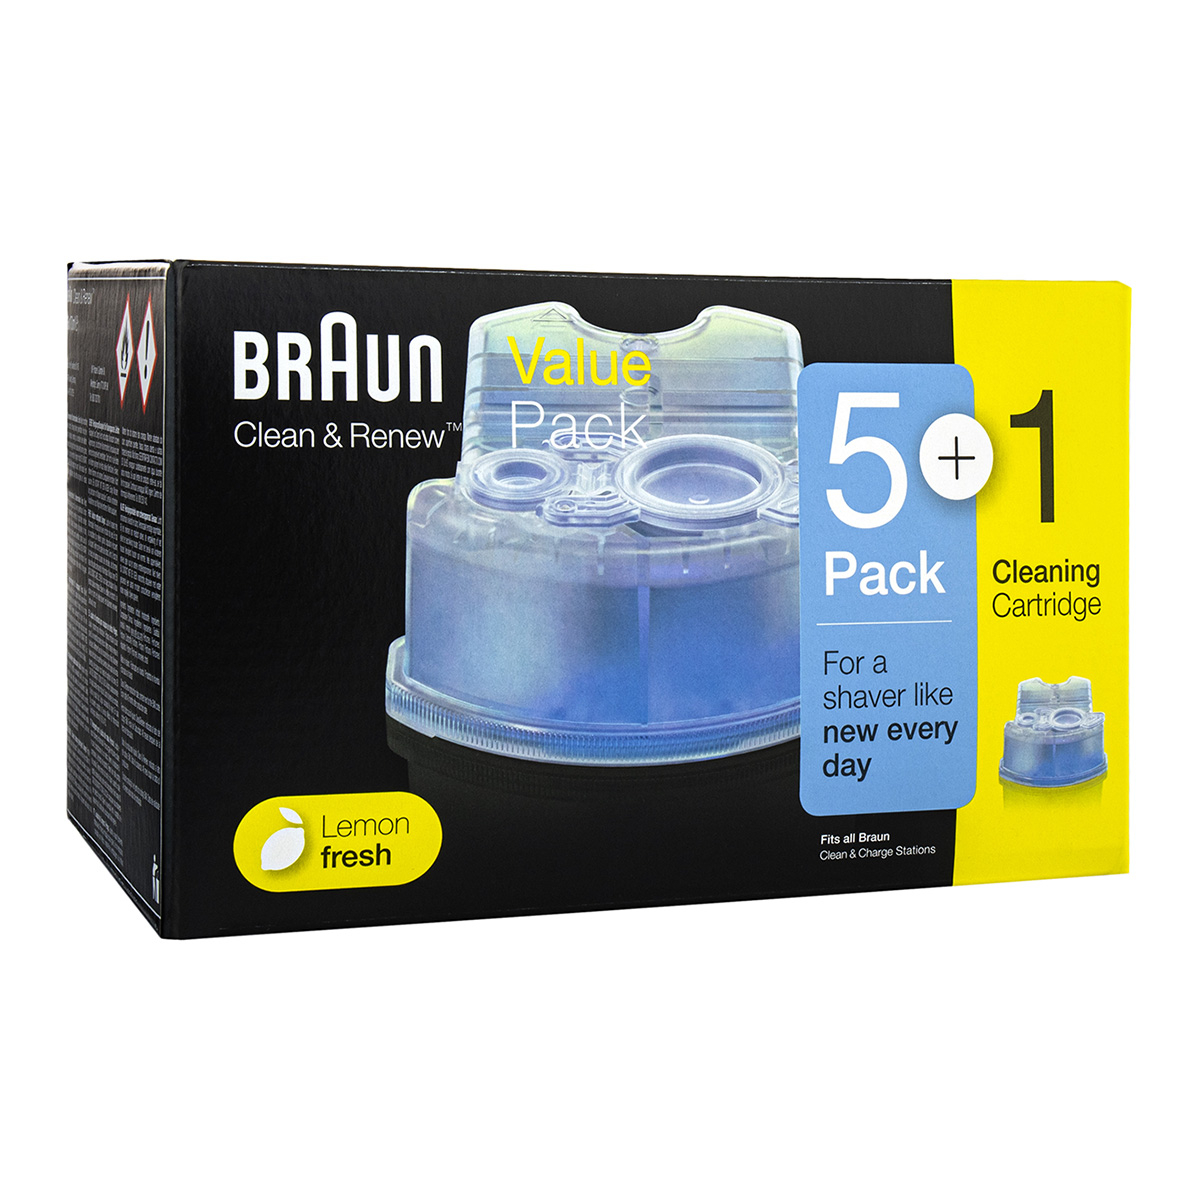 https://www.beautybuys.com/media/catalog/product/cache/dca87c1e1d9bc69d703ff6824b8ff5e4/b/r/bra95351-braun-clean-renew-refill-cartridges-pack-6.jpg